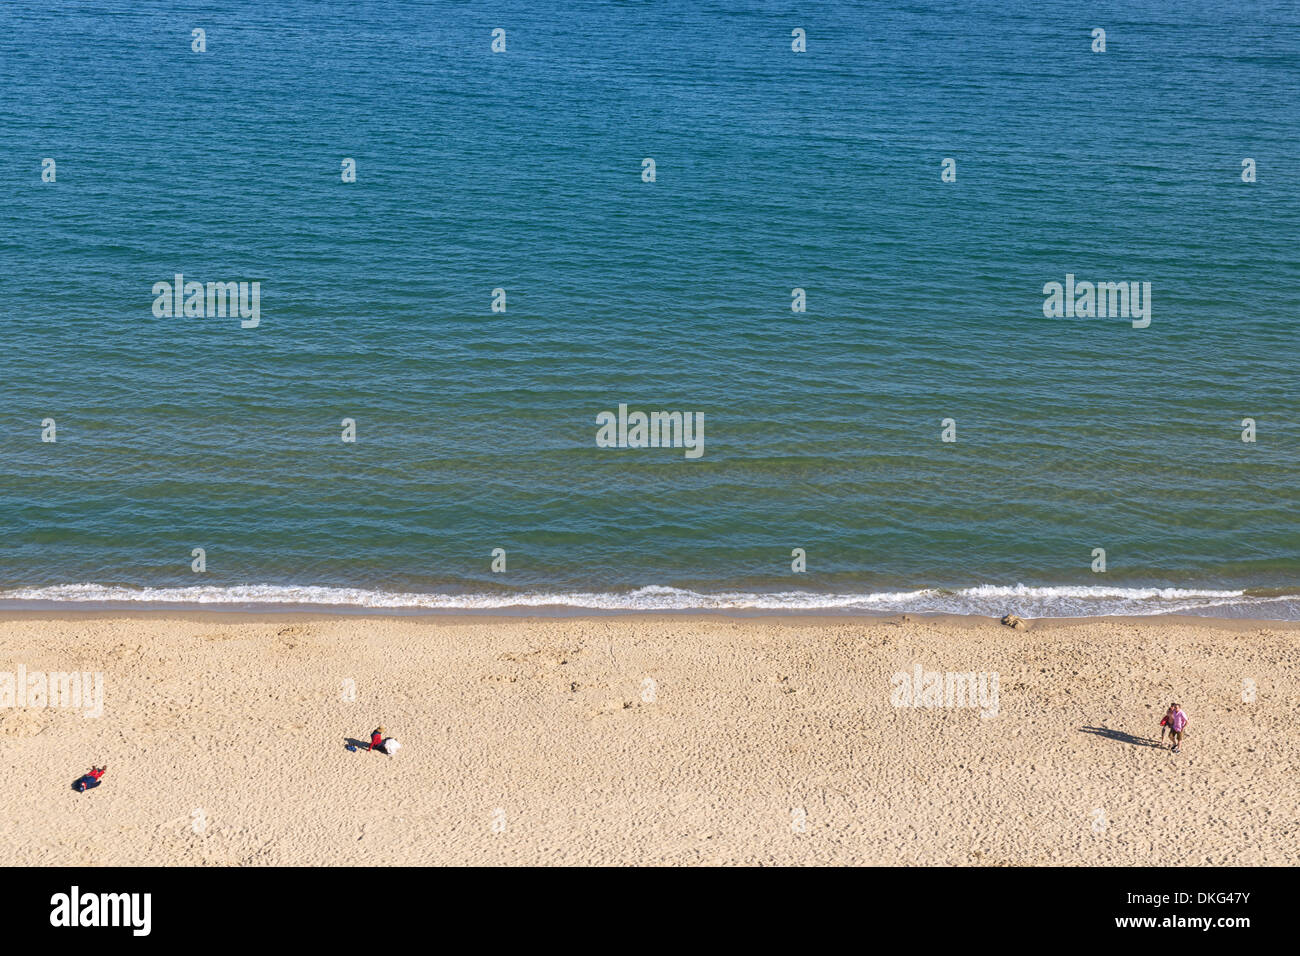 People on beach, Poole, Dorset, UK Stock Photo